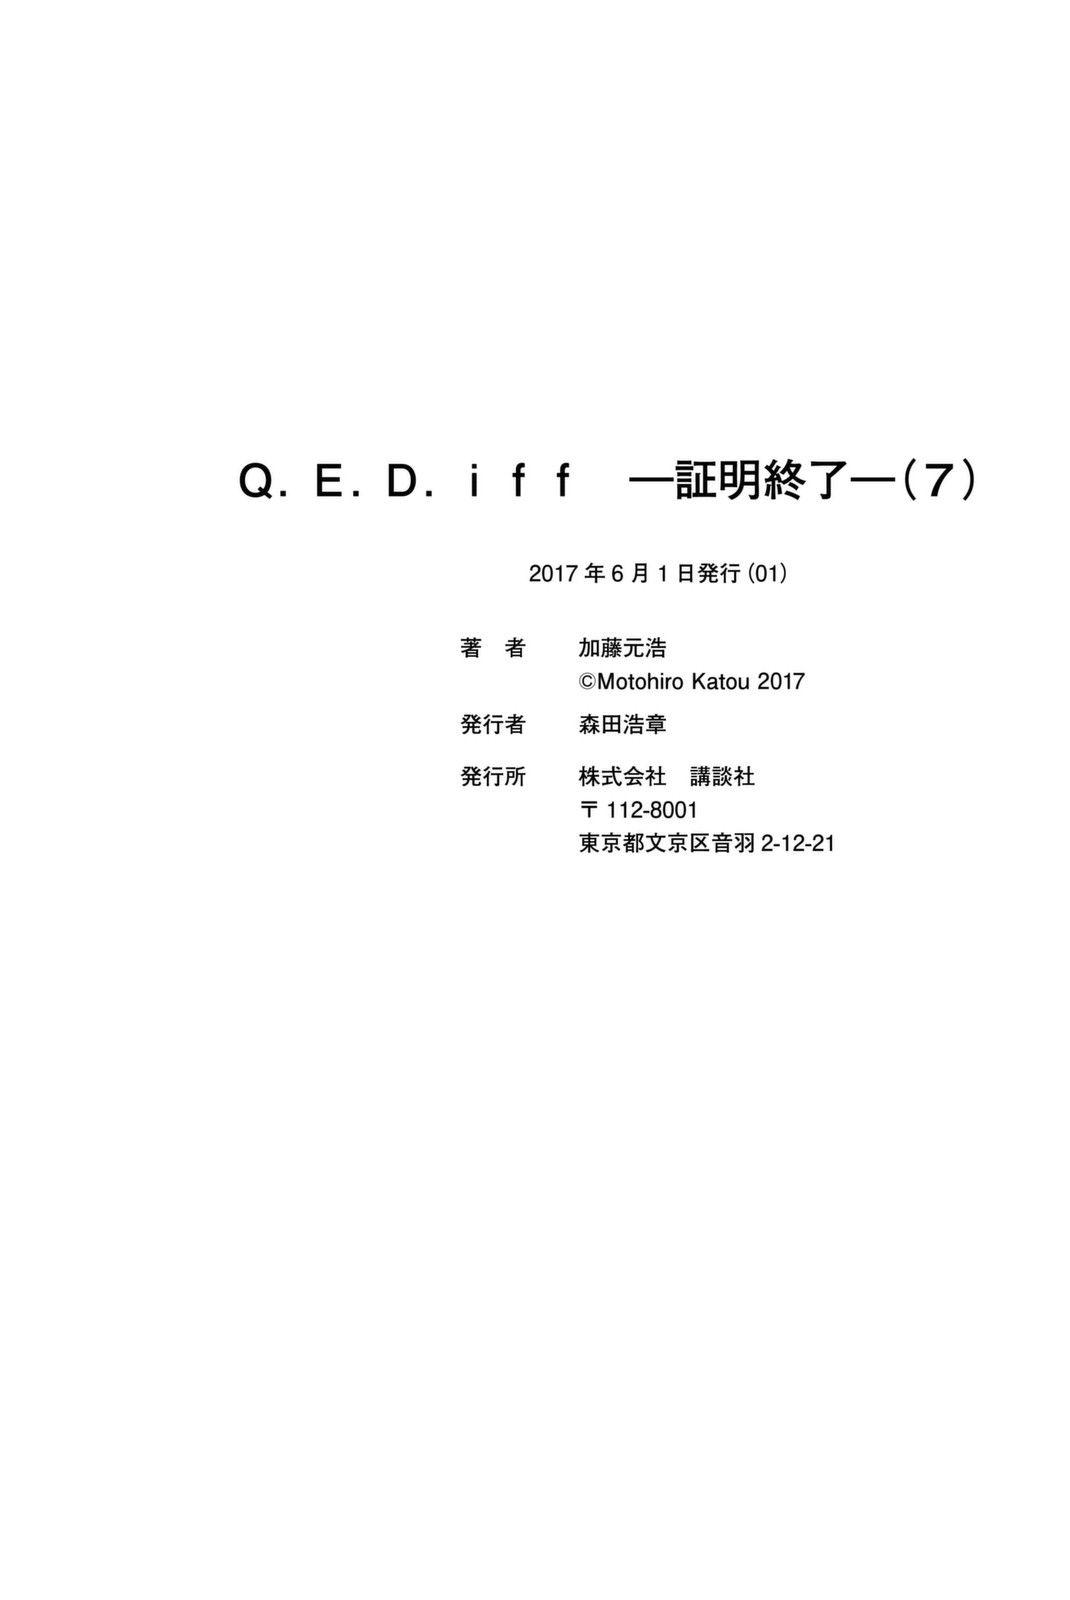 Q.E.D. iff-證明終了- - 14話(2/2) - 7